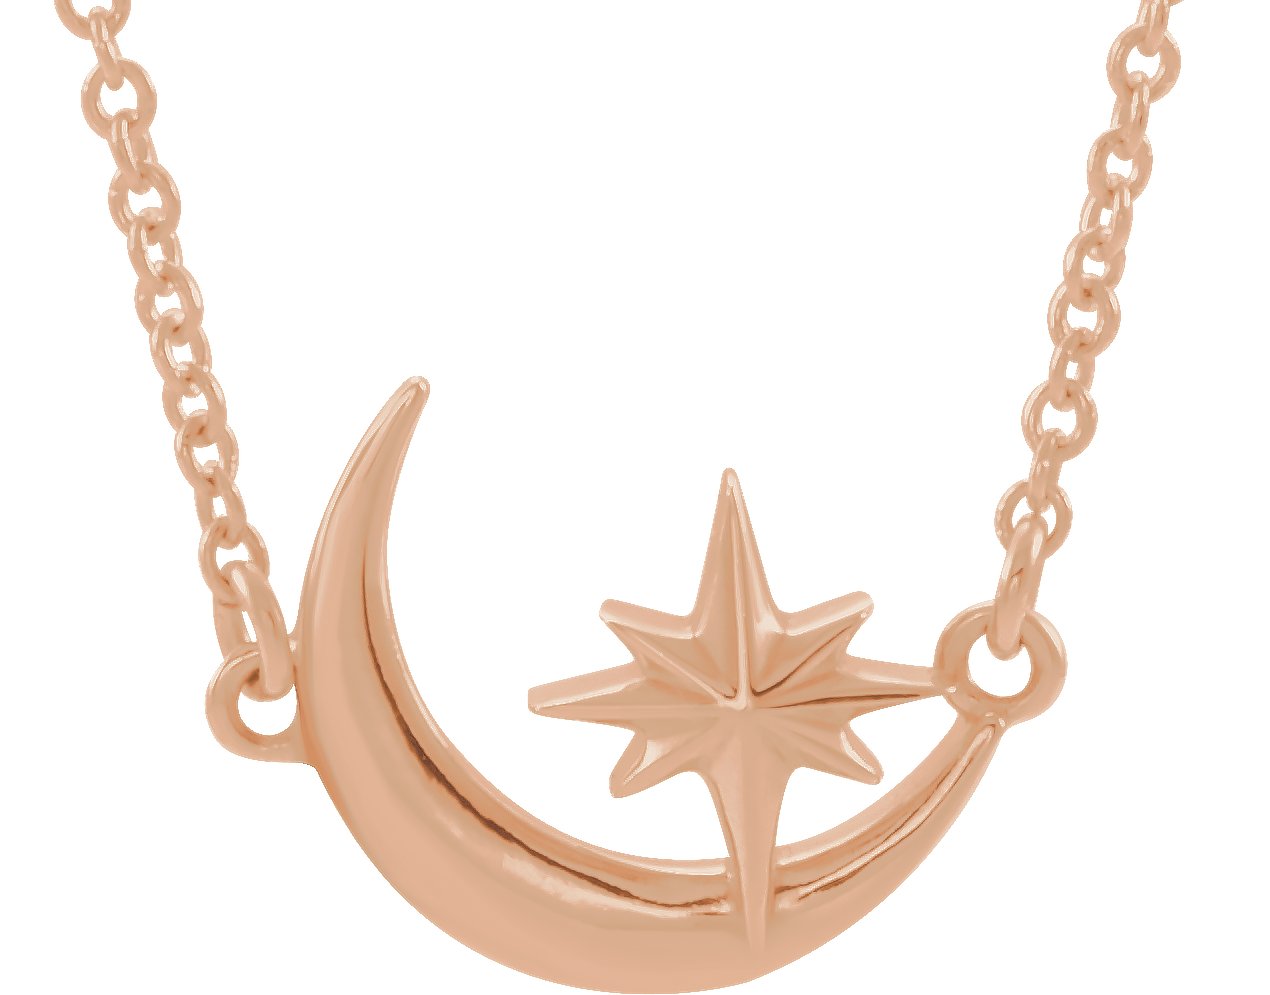 14K Rose Crescent Moon & Star 16-18" Necklace   